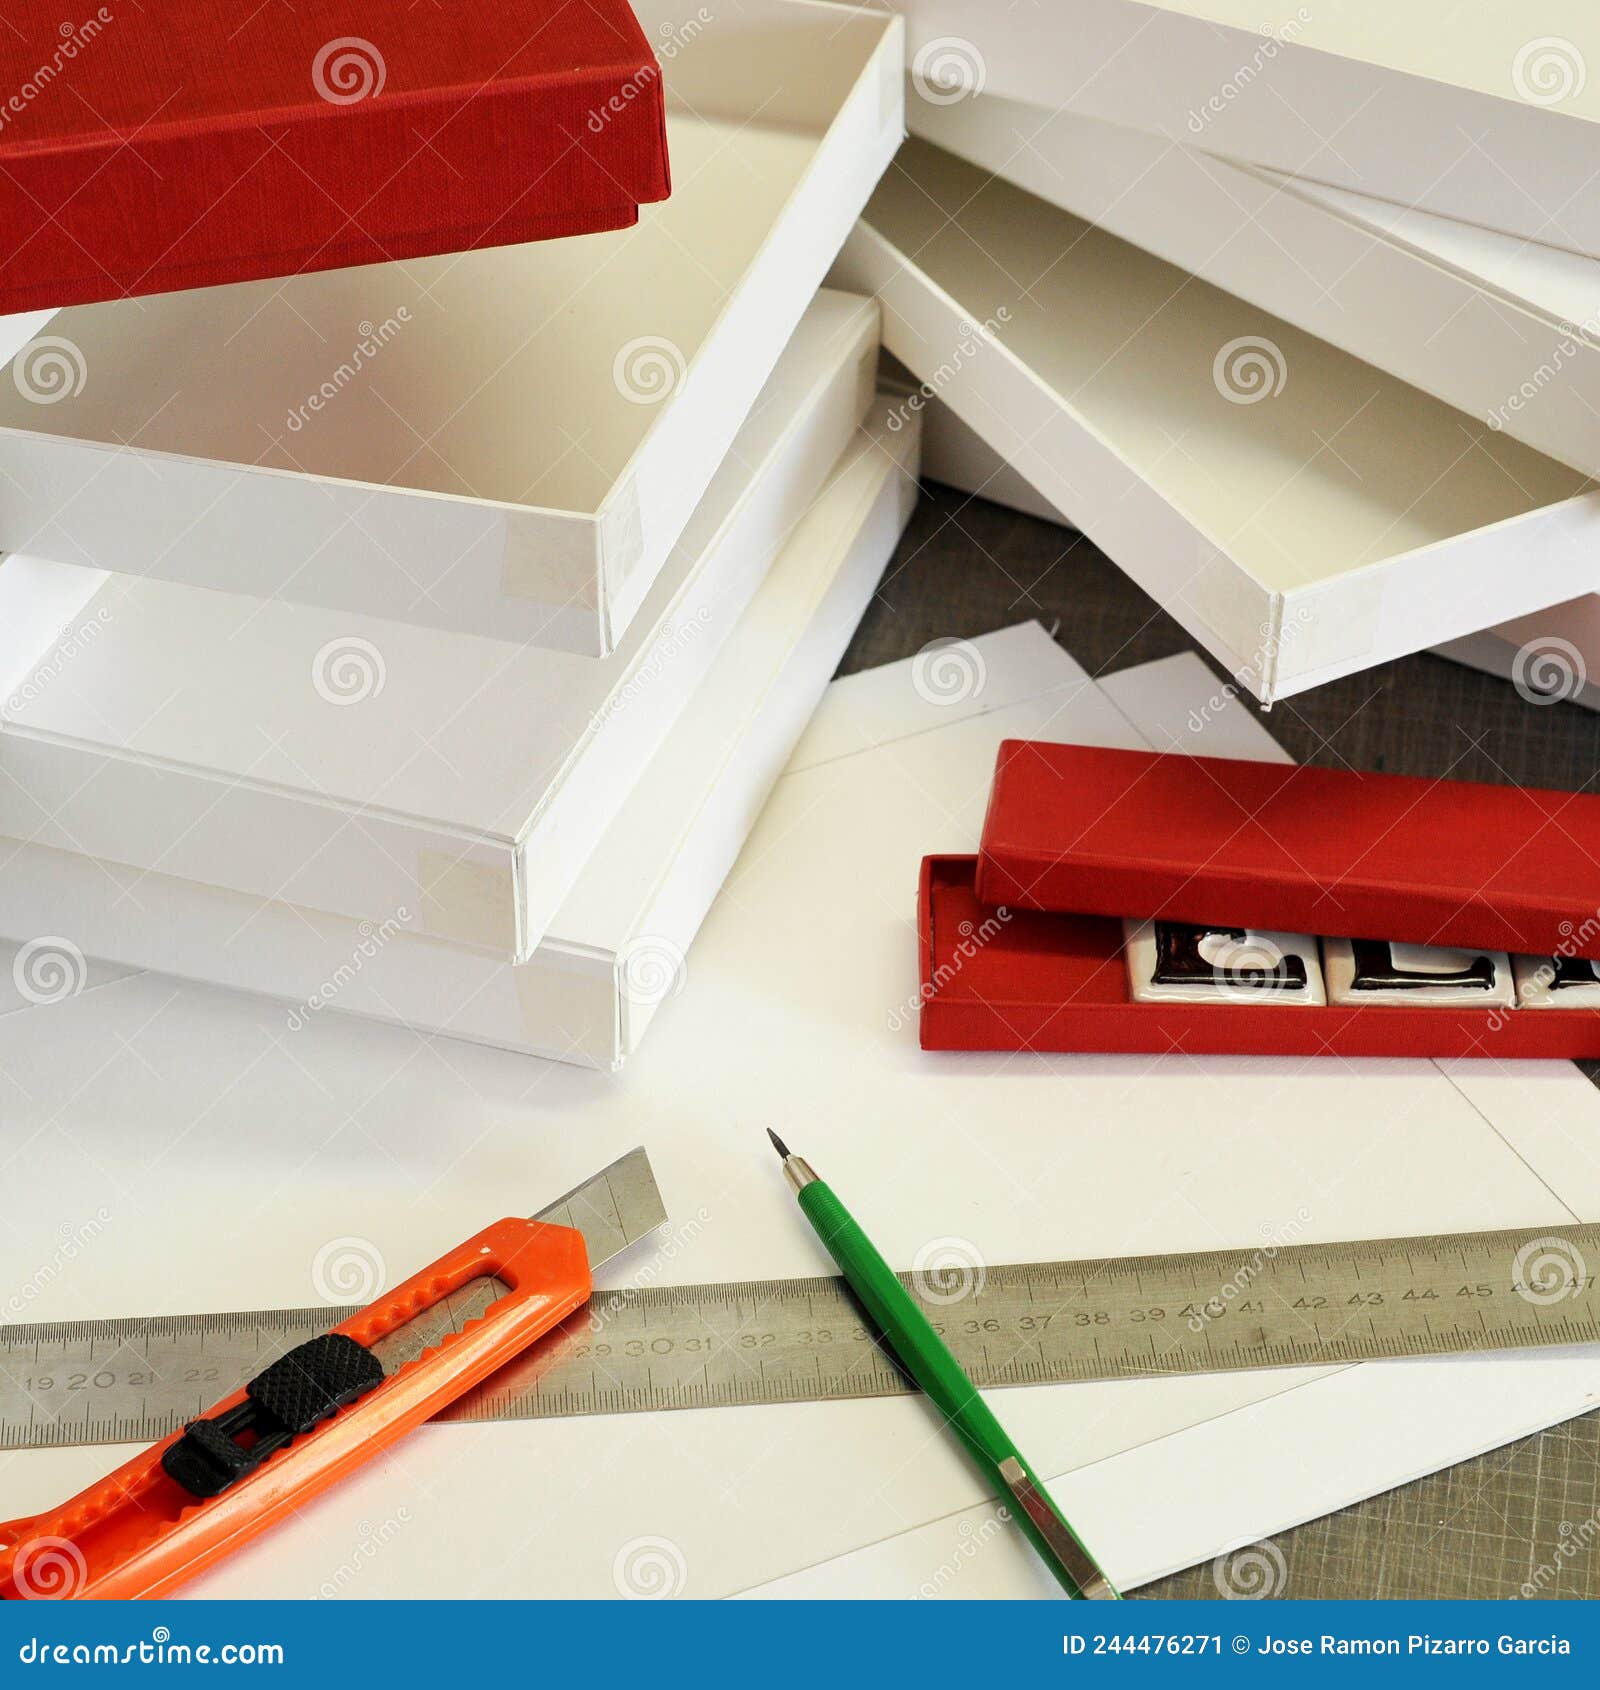 cajas de cartÃÂ³n artesanales hechas a mano para contener regalos